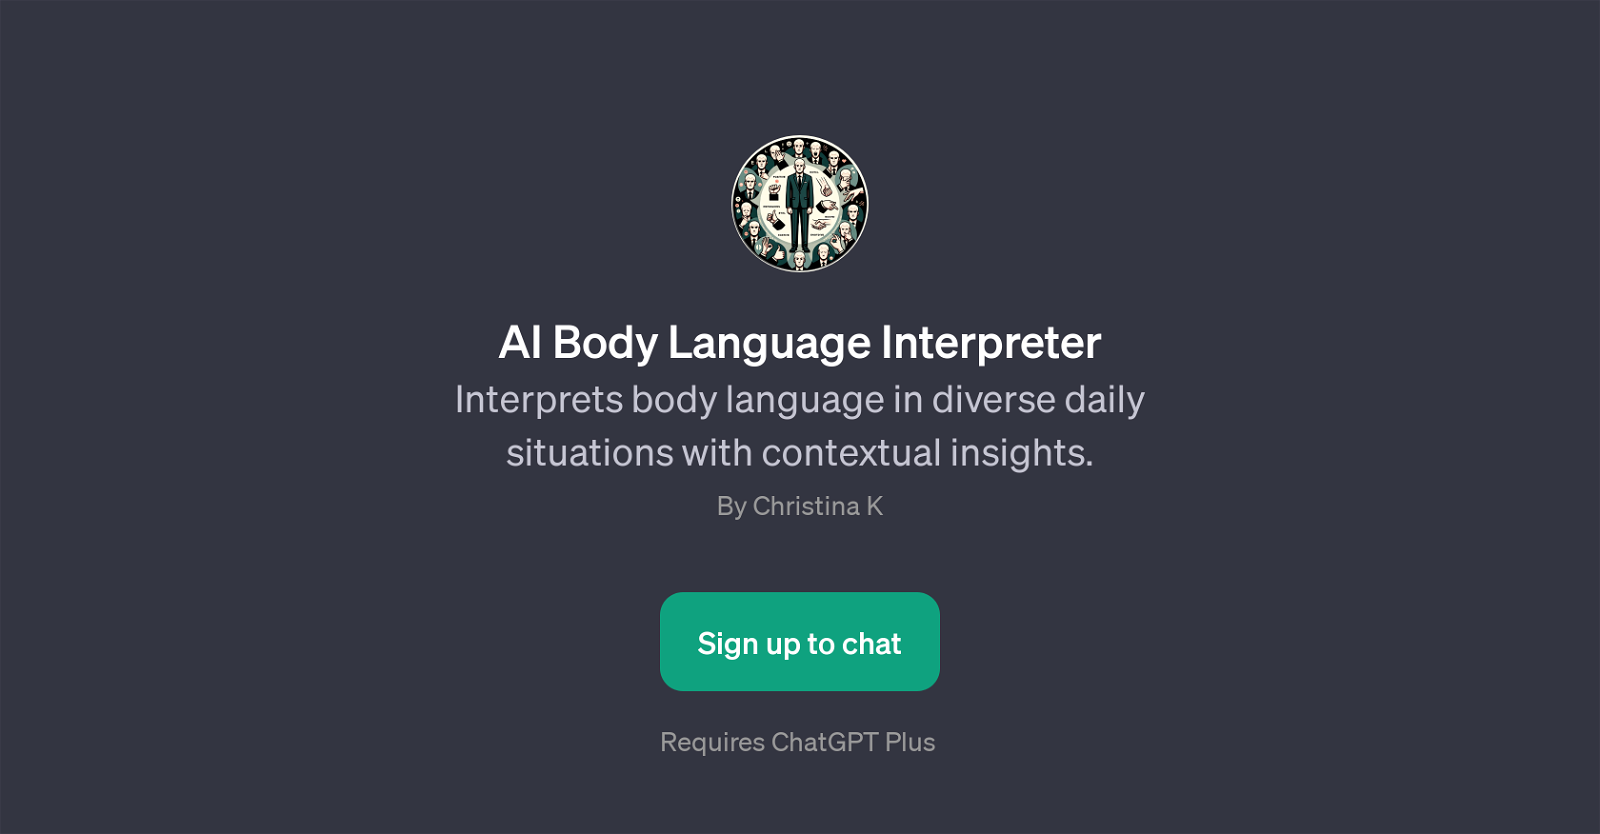 AI Body Language Interpreter website